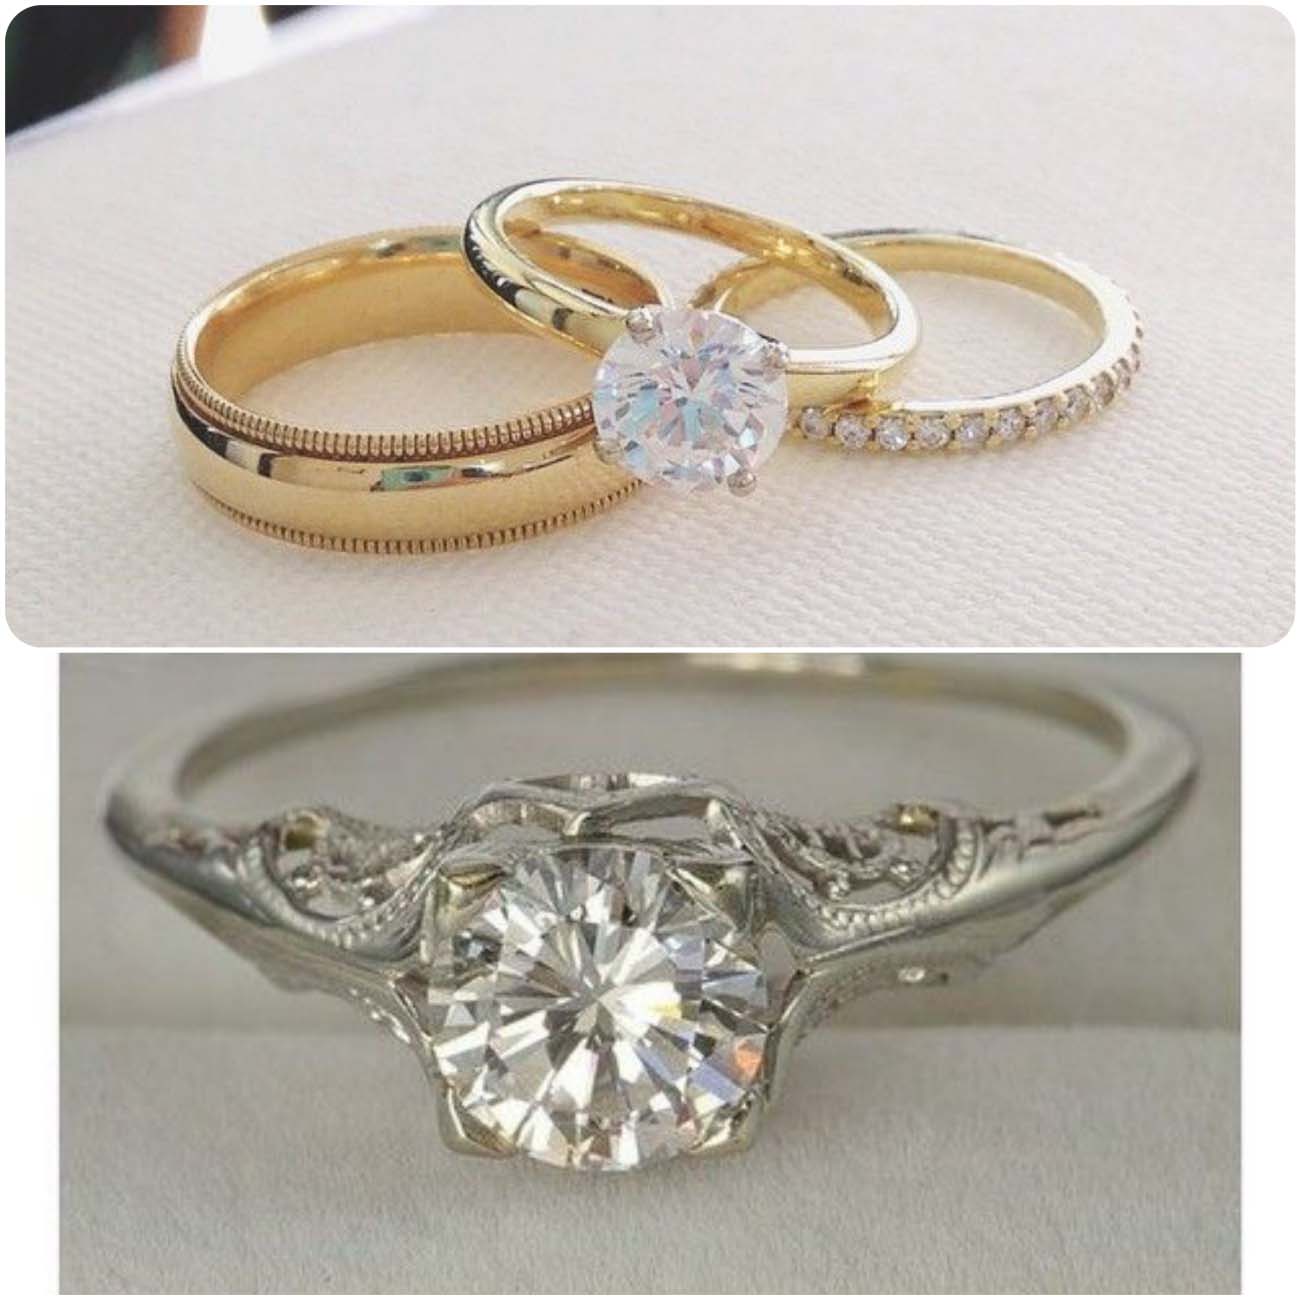 Popular Ring Design: 25 New Latest Diamond Ring Designs